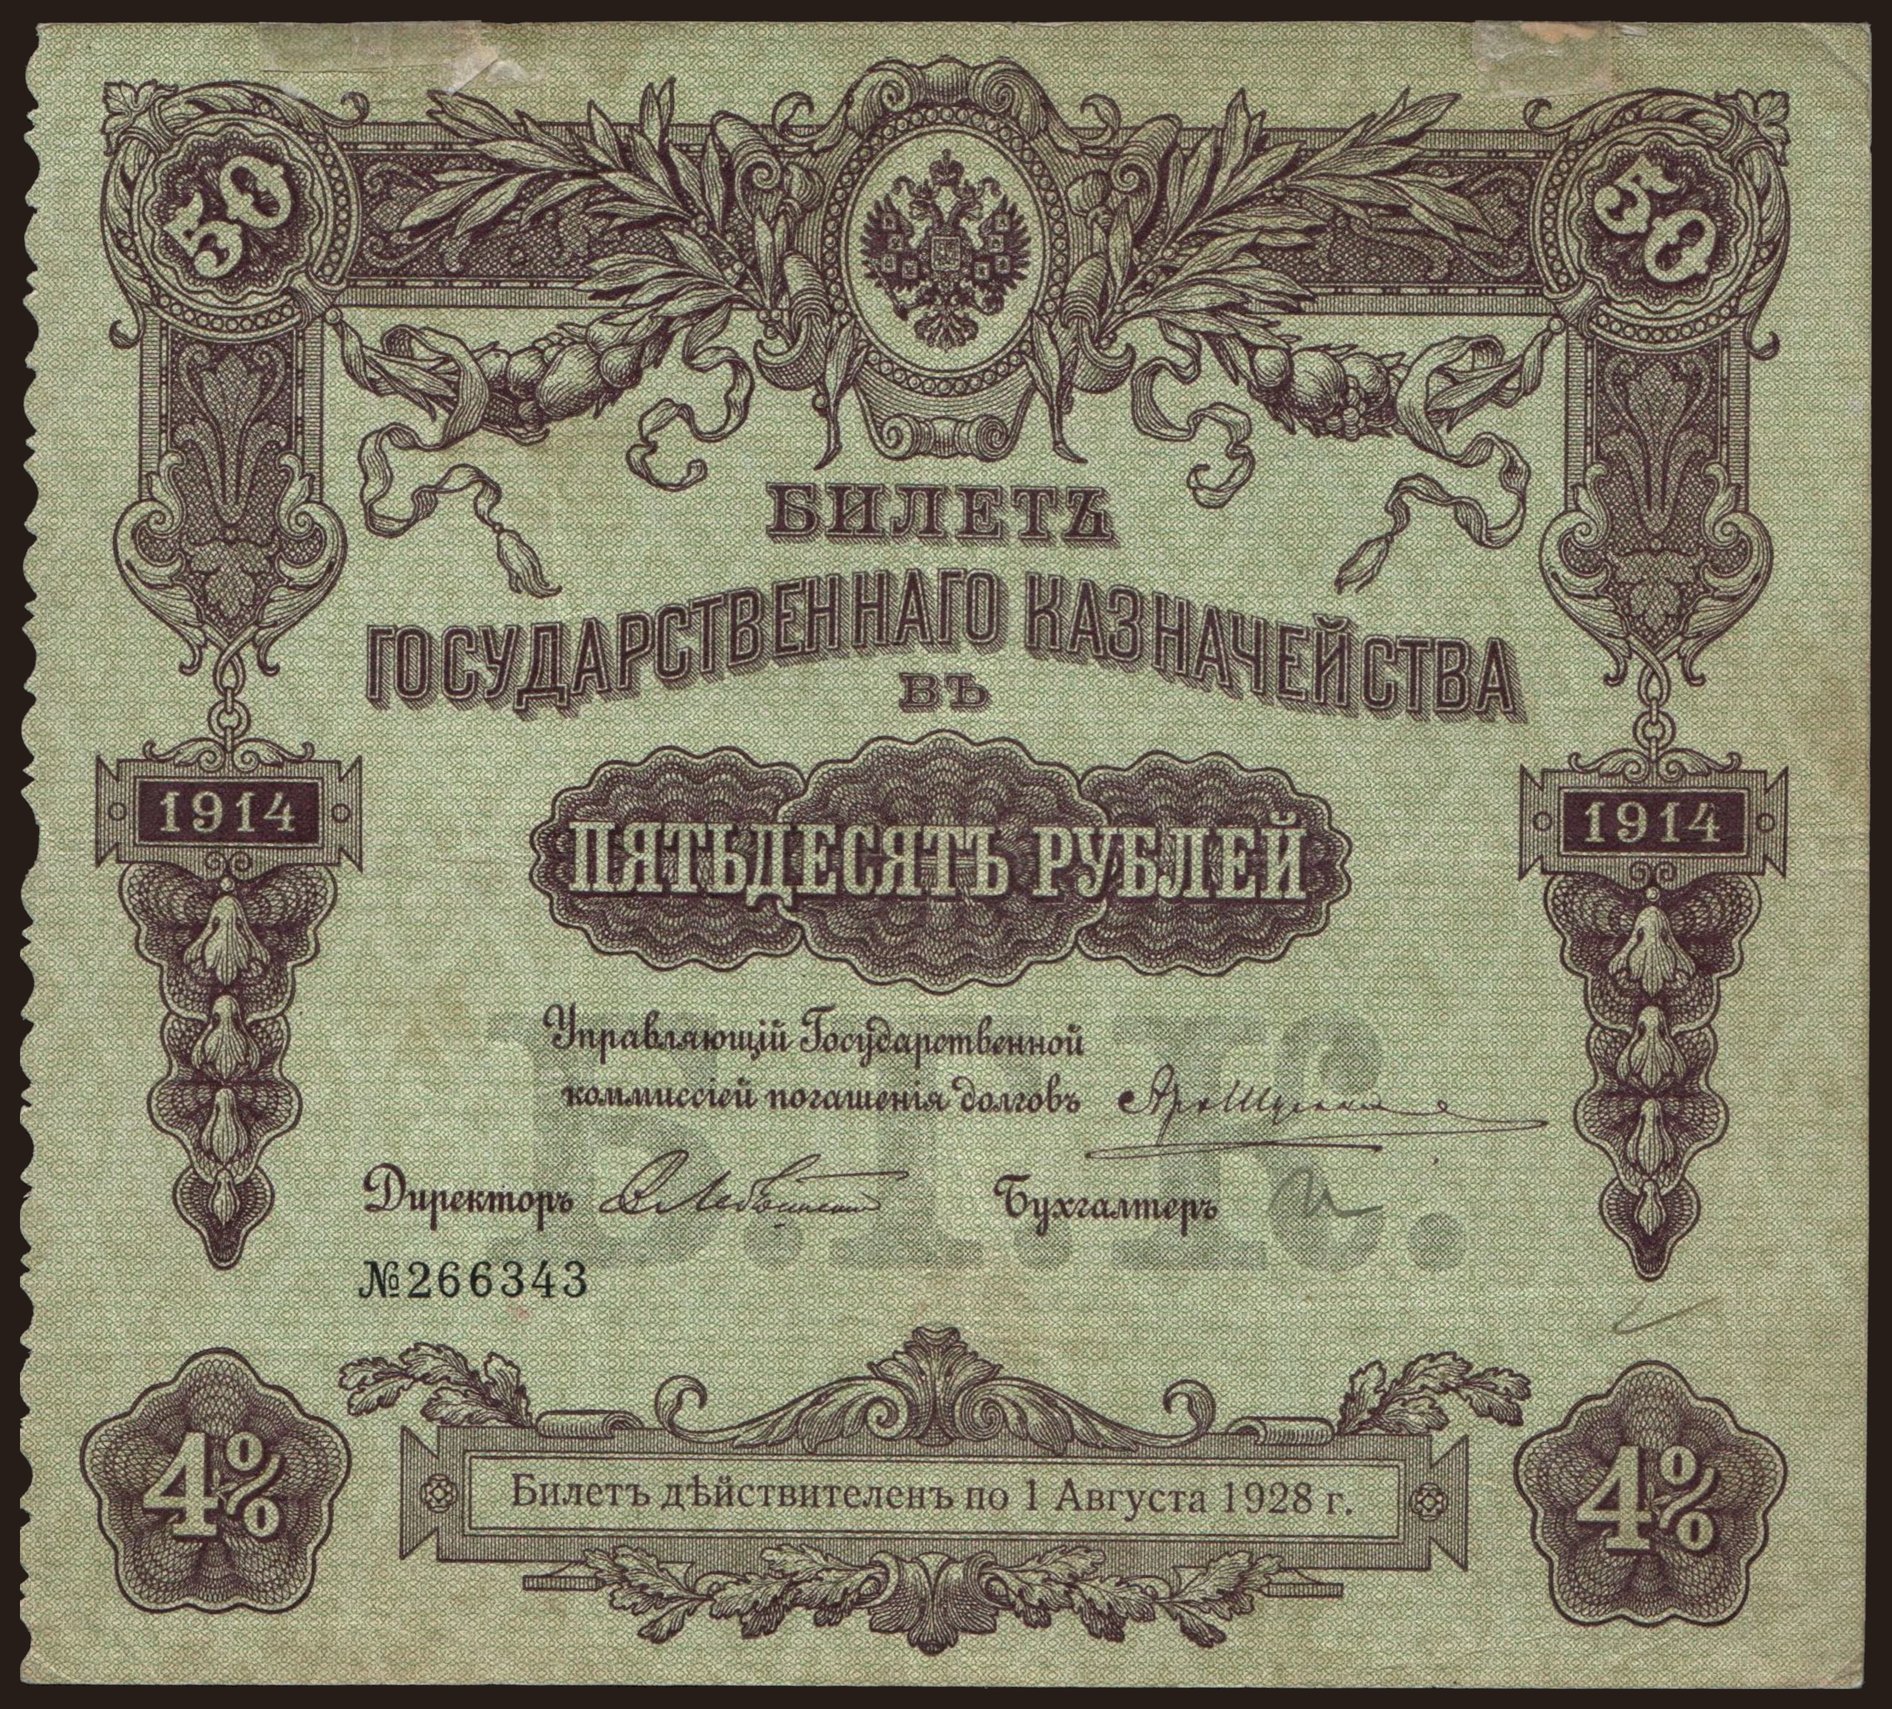 50 rubel, 1914